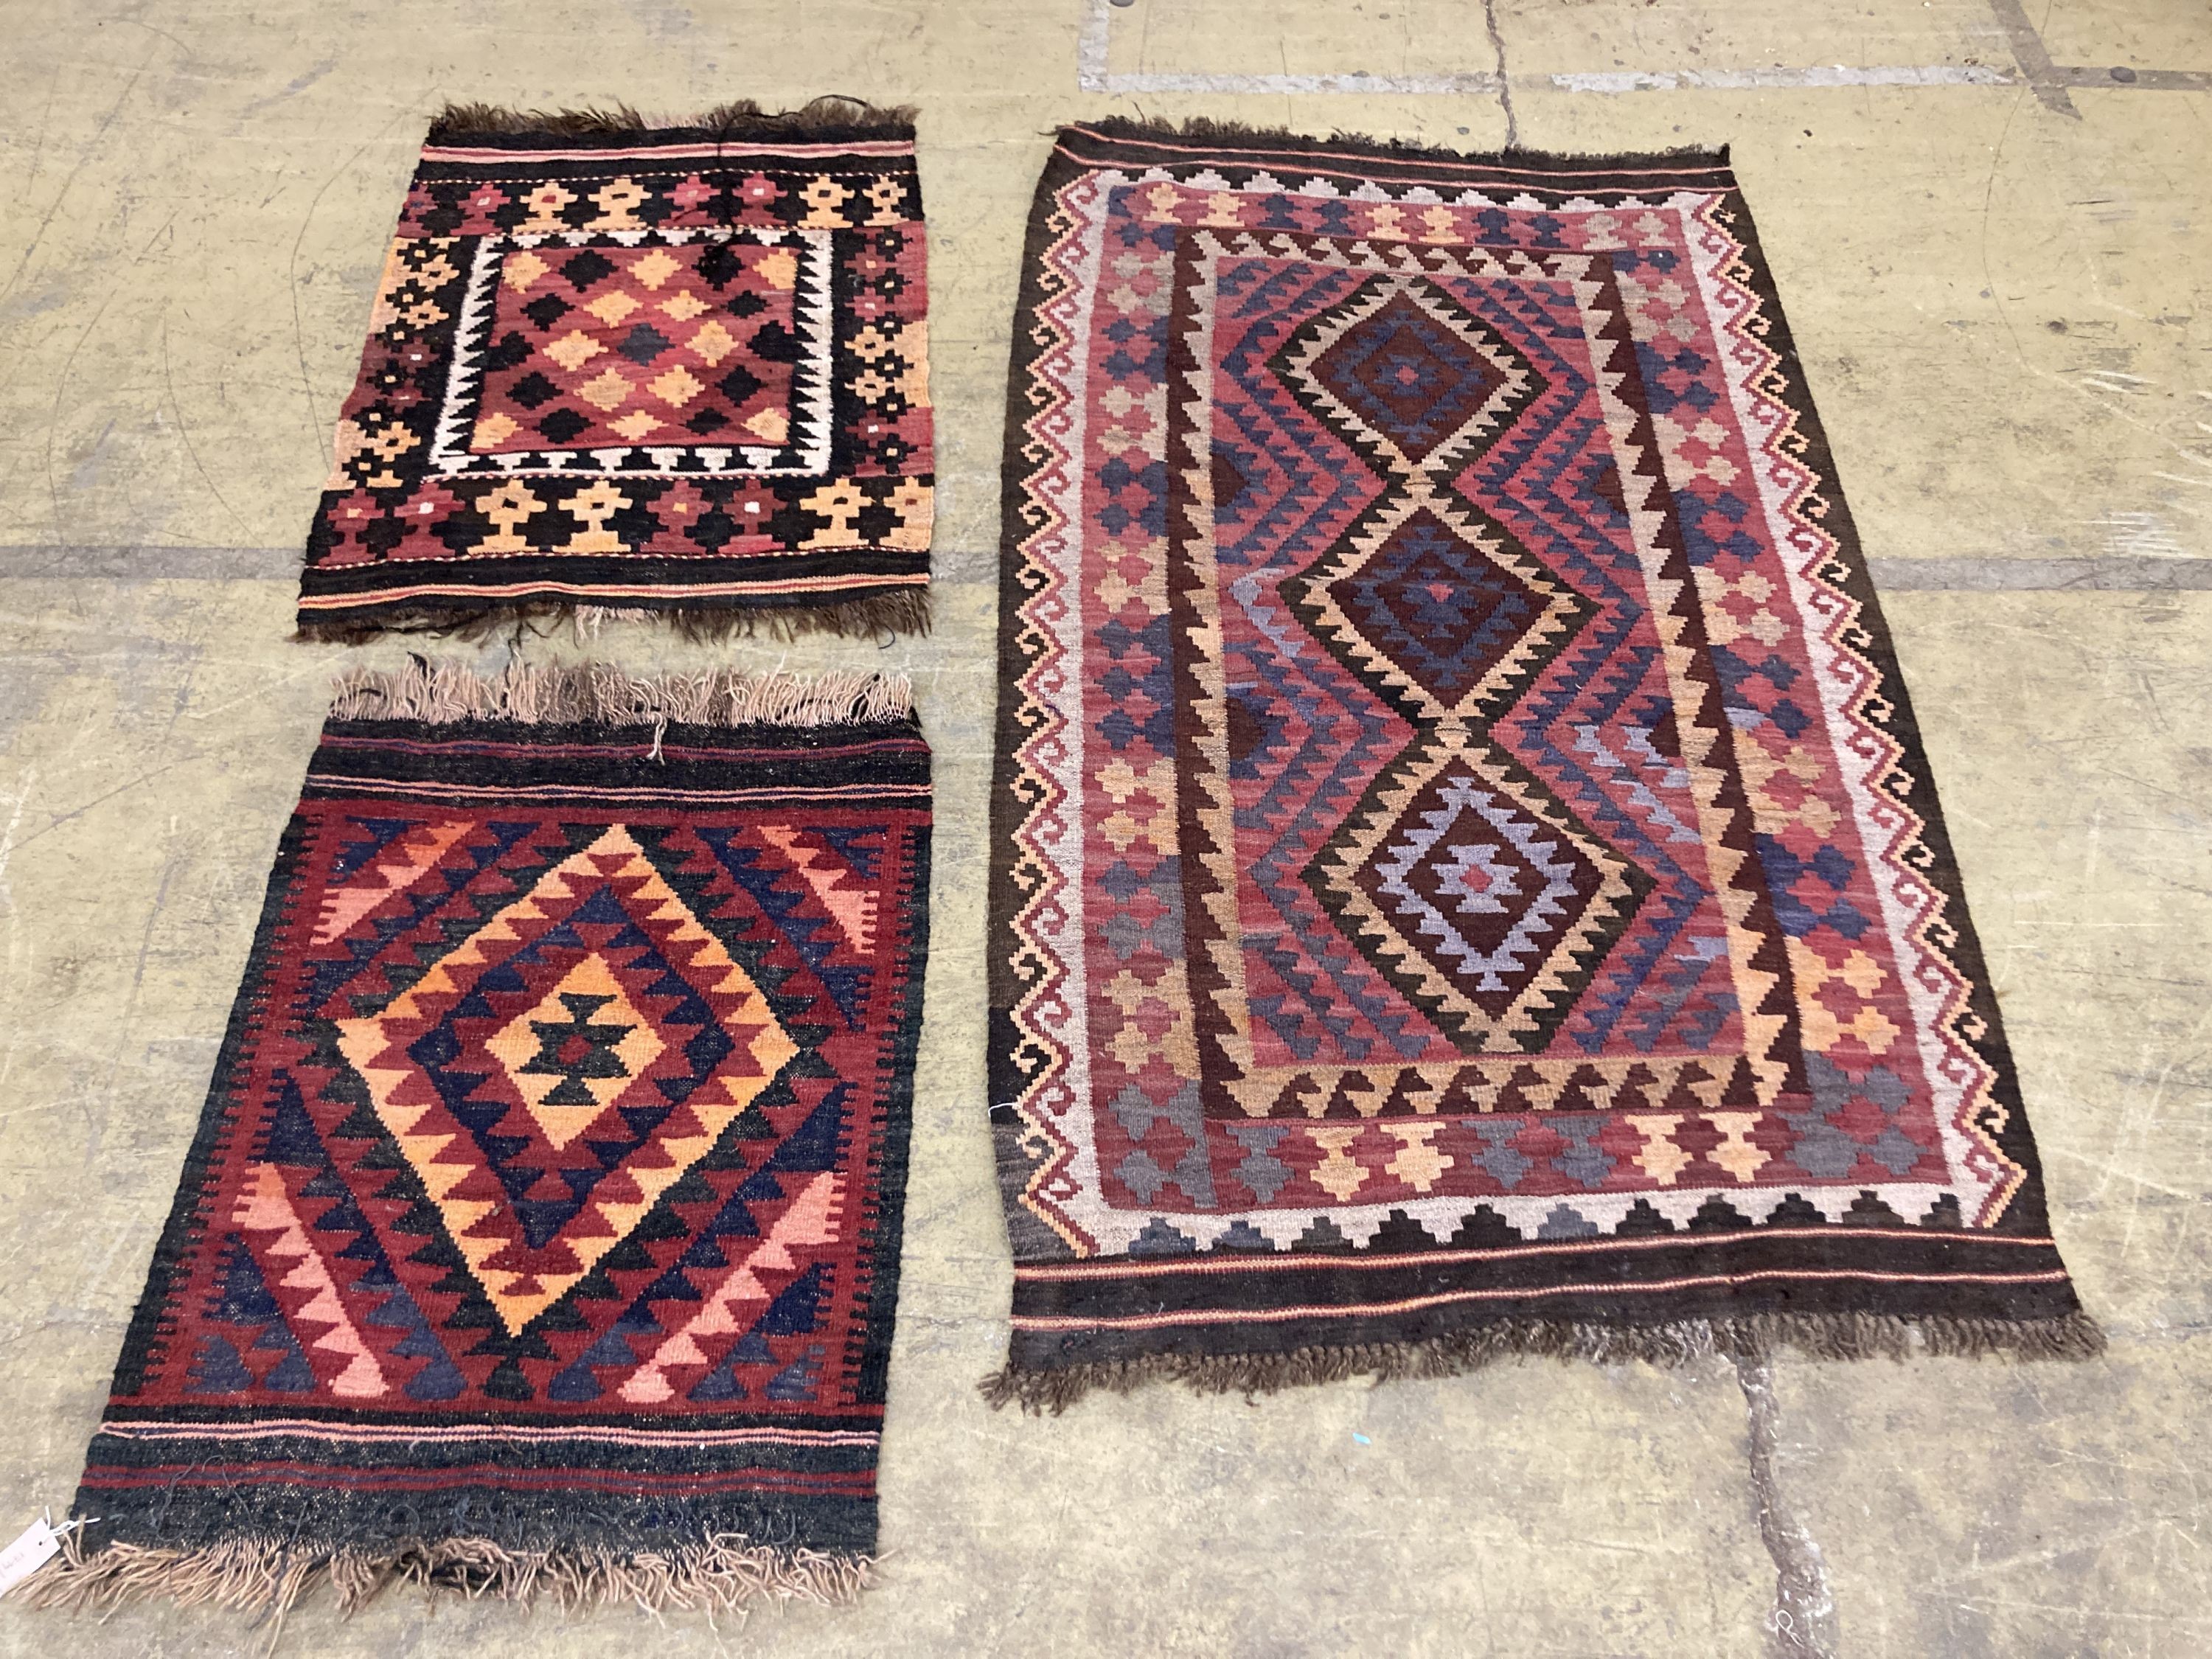 Three polychrome Kelim rugs, largest 180 x 100 cms                                                                                                                                                                          